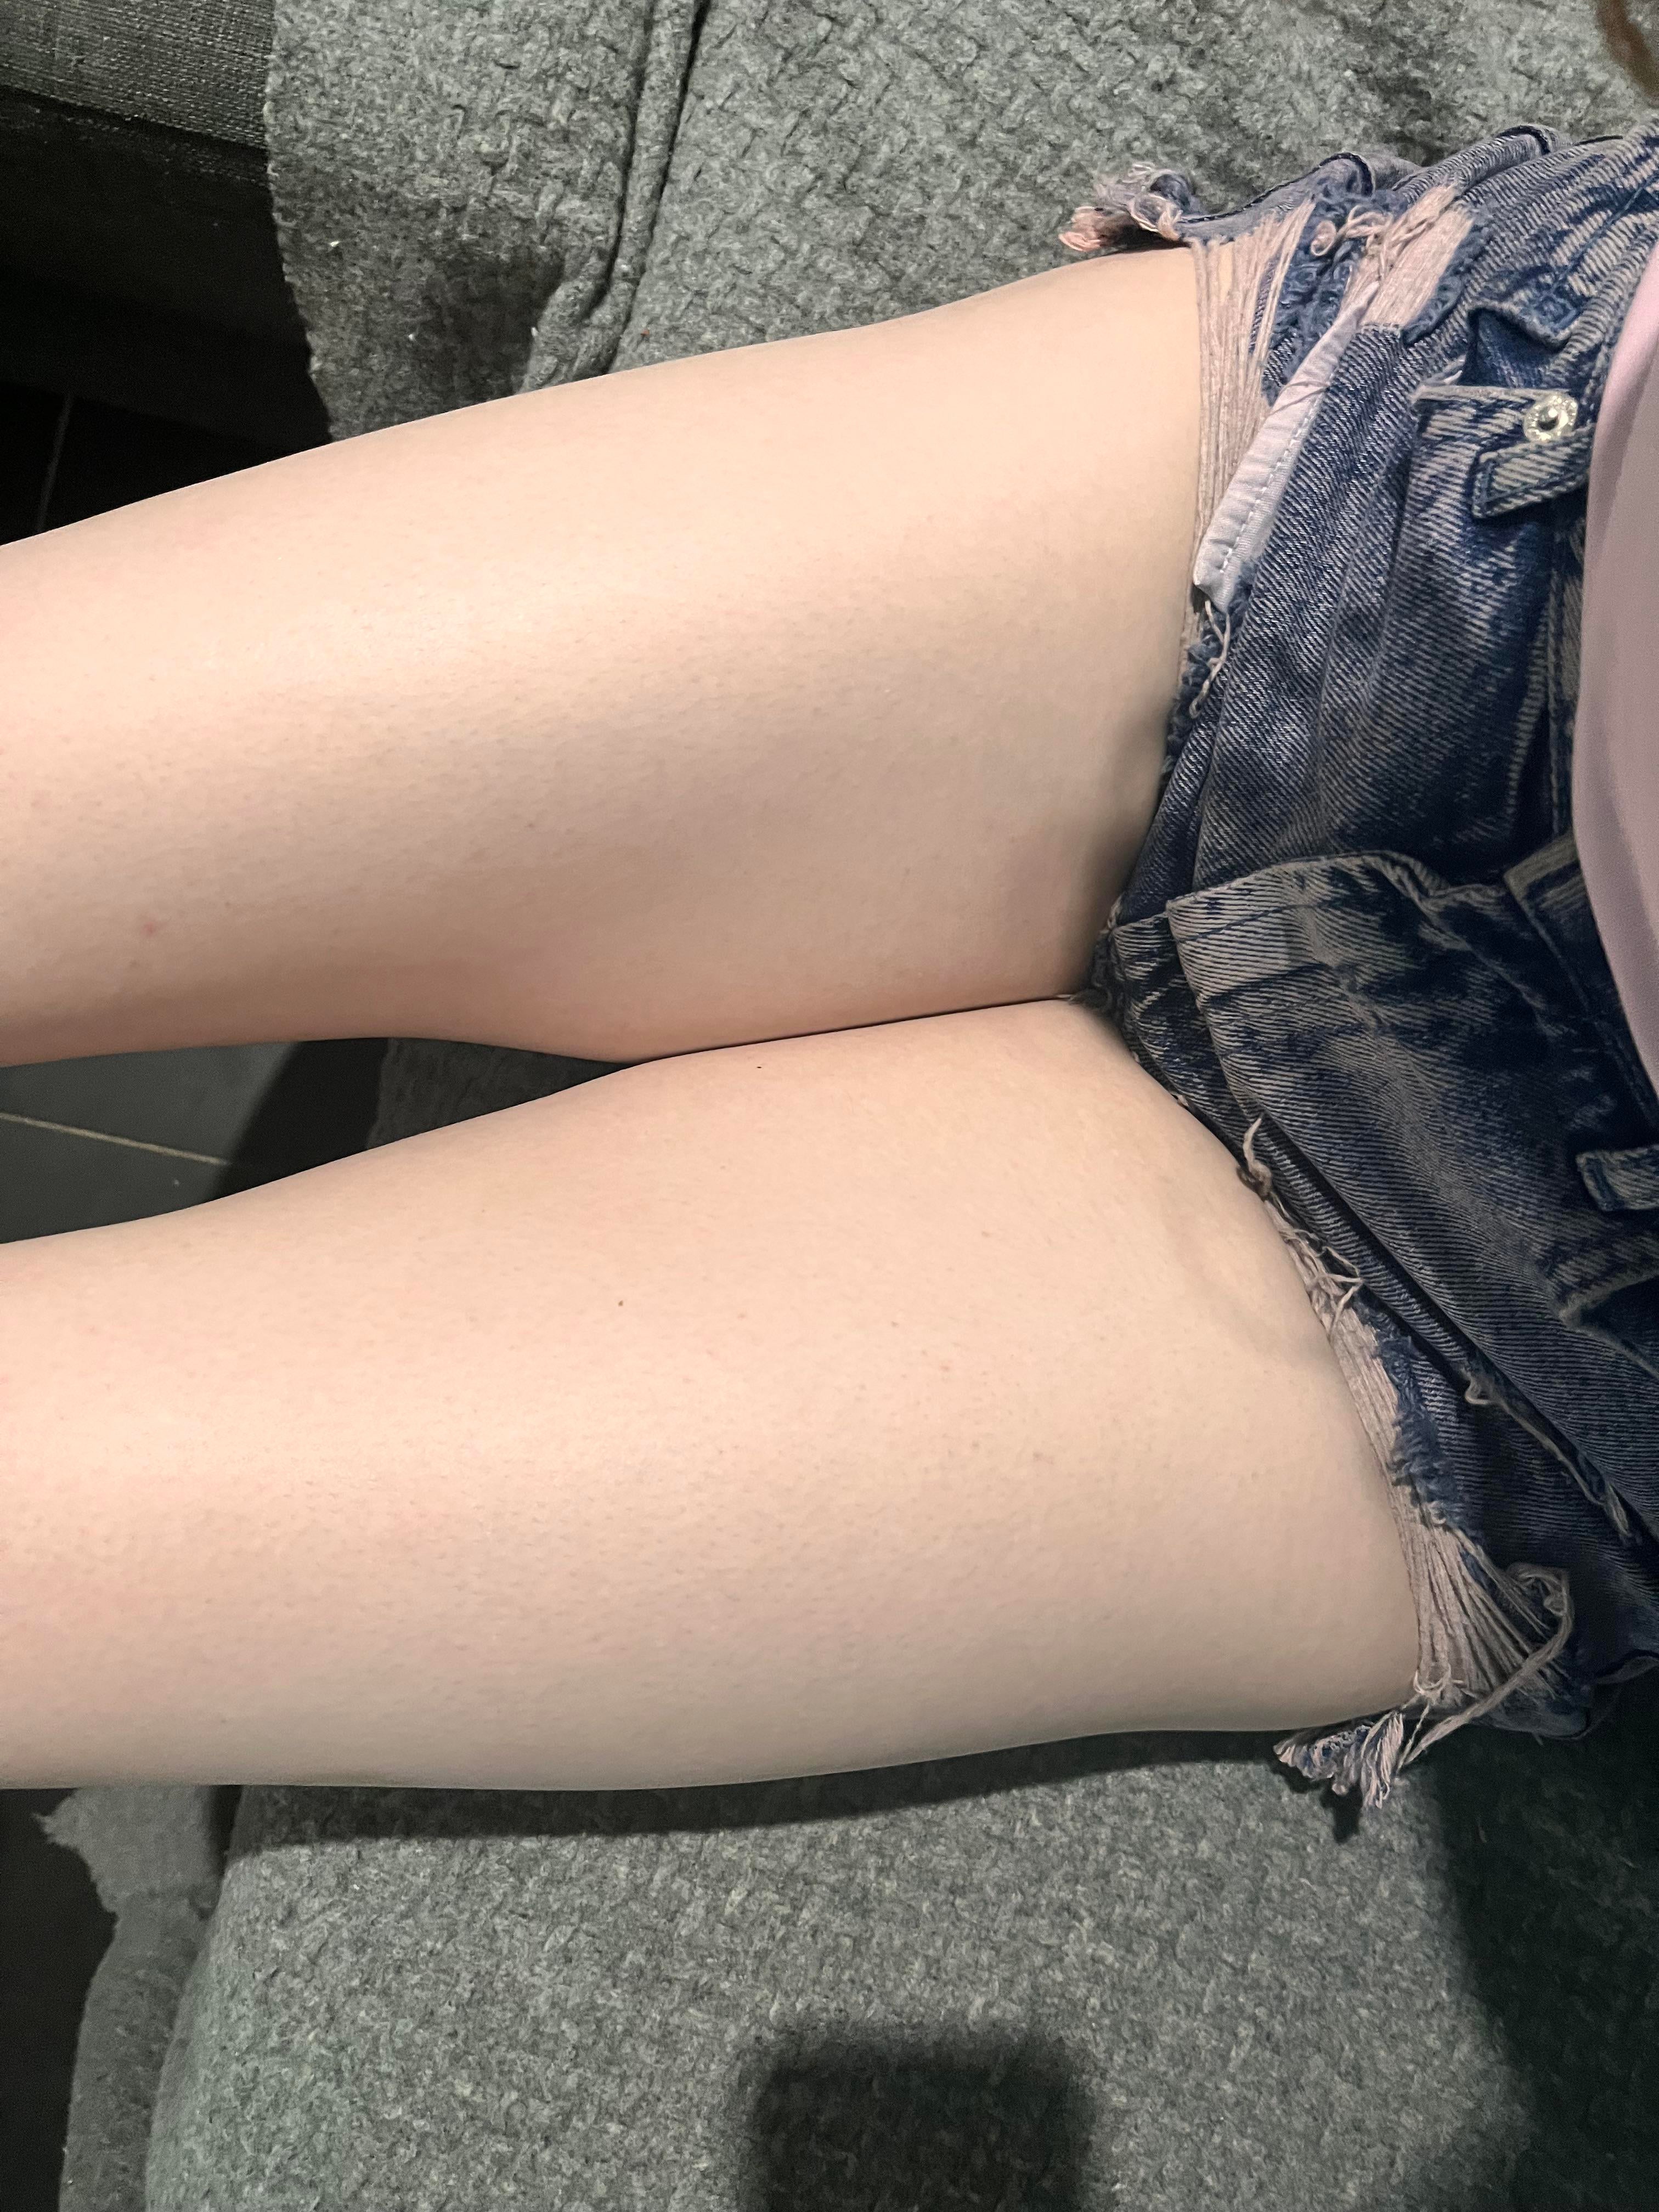 Do you like my shorts? zriys6 - transexual woman